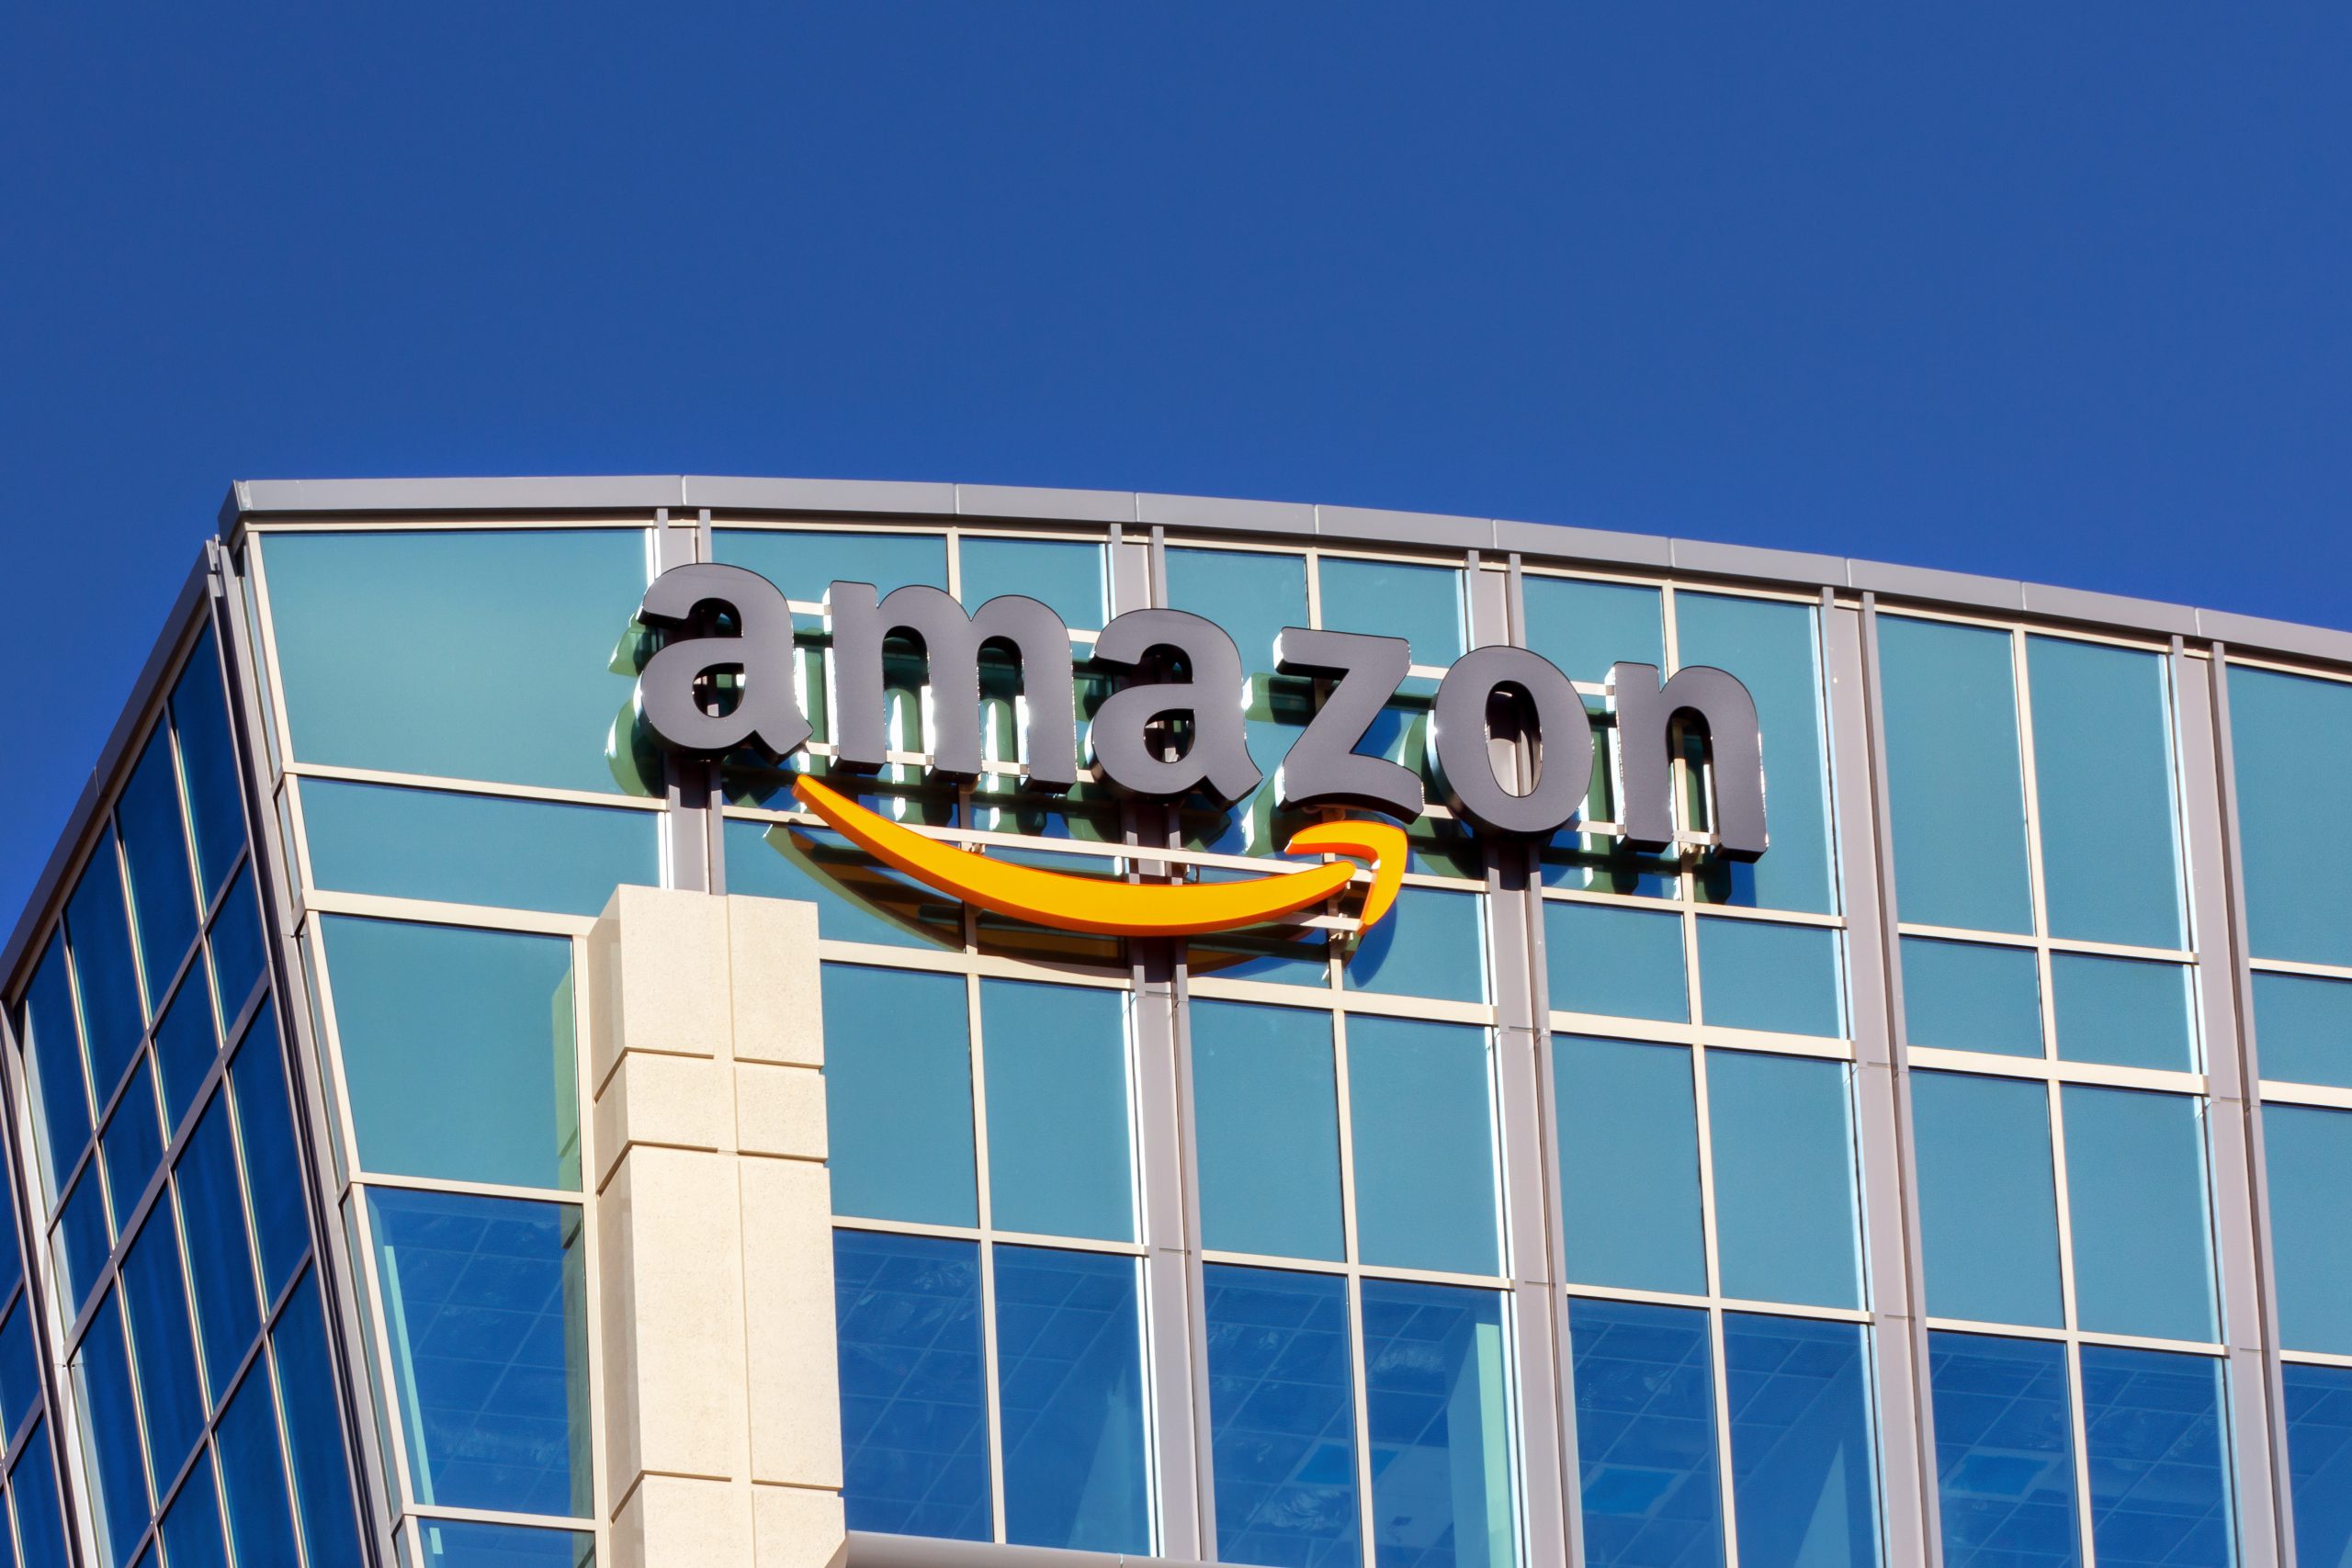 Amazon sign on building in Santa Clara, Calif.